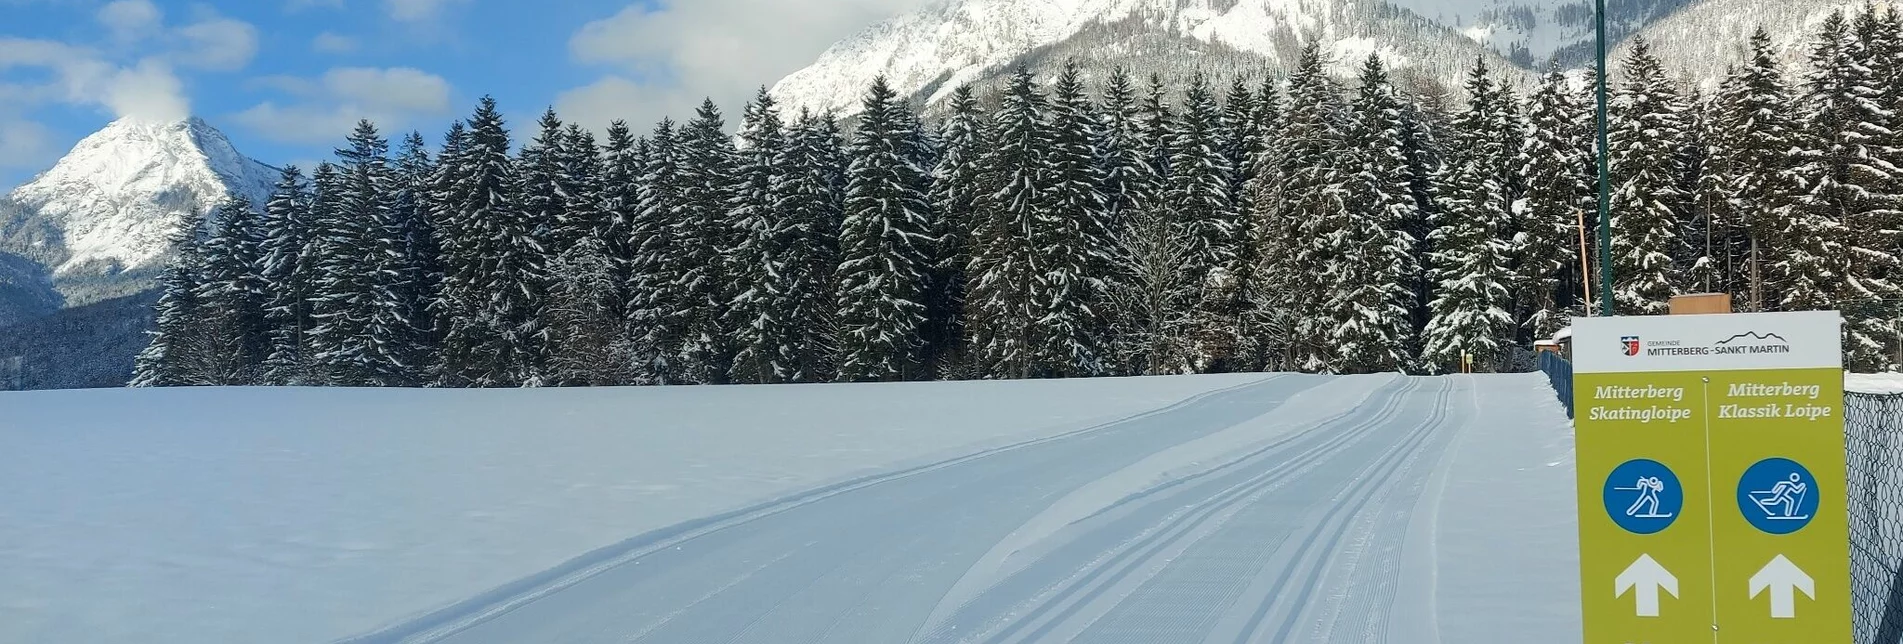 Ski nordic skating Mitterberg Skating XC Trail - Touren-Impression #1 | © Erlebnisregion Schladming-Dachstein